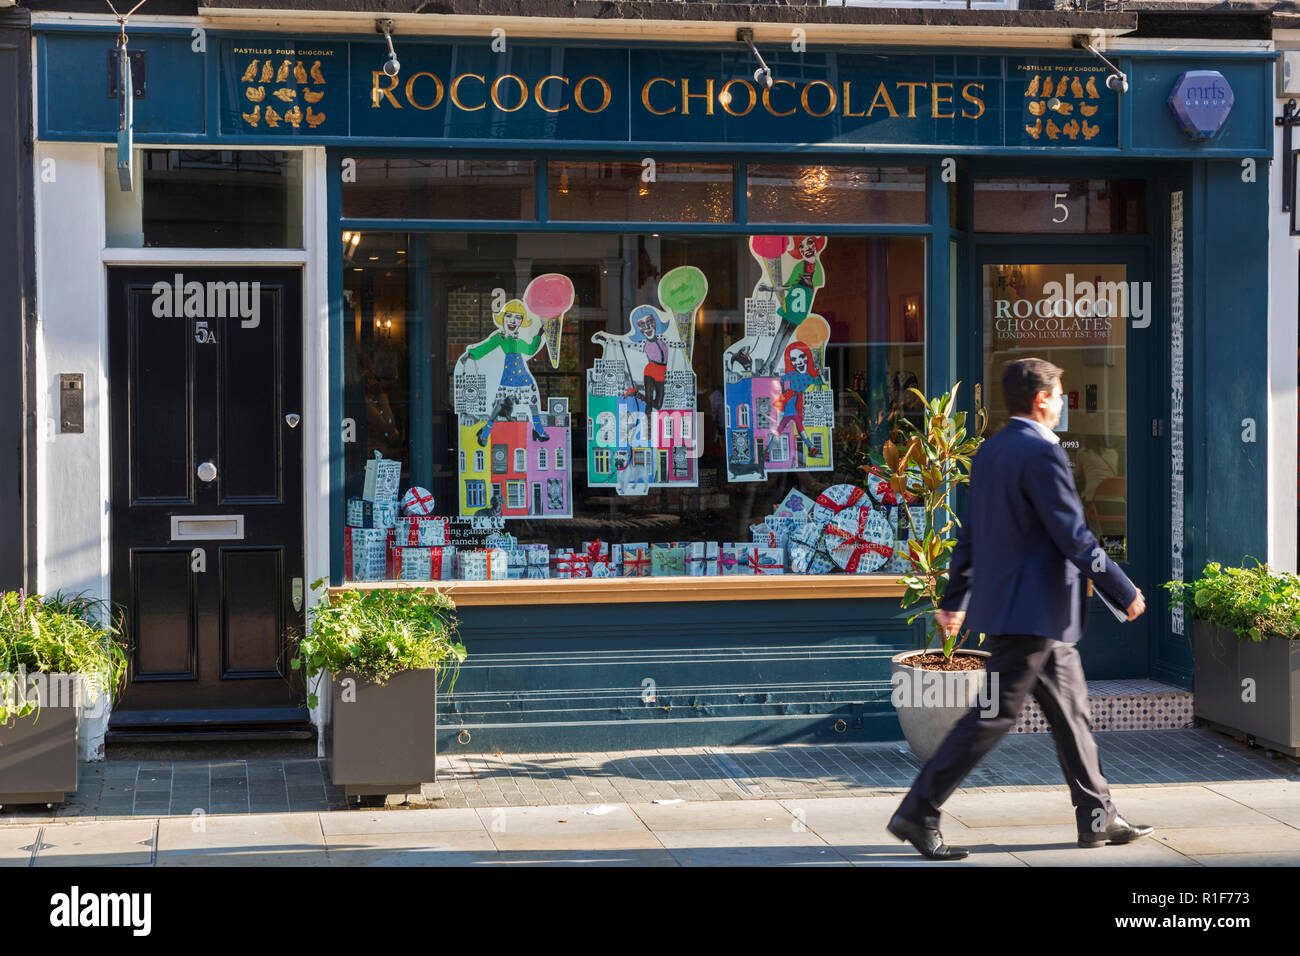 Le rococo Chocolates est un artisan chocolatier dans Motcomb Street, Knightsbridge, London SW1X 8JU, Angleterre, Royaume-Uni Banque D'Images